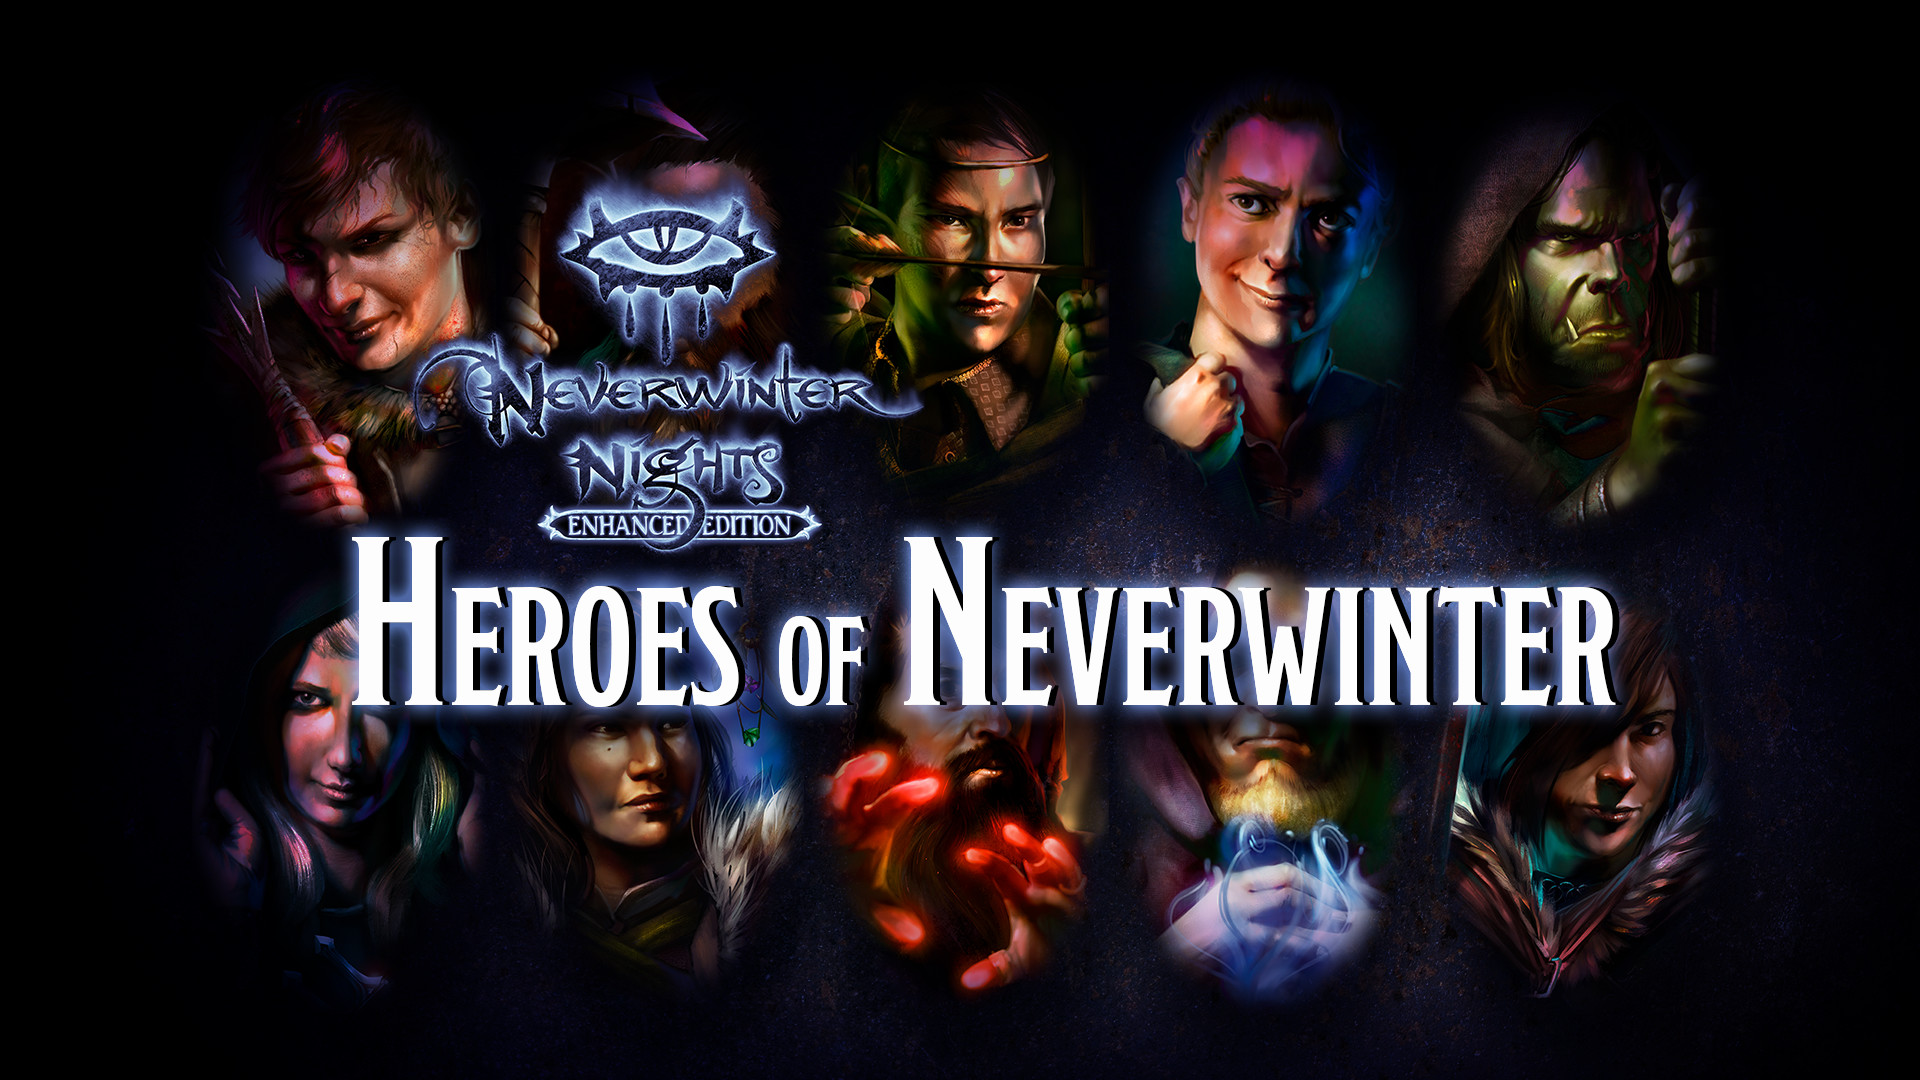 Neverwinter Nights: Heroes of Neverwinter Featured Screenshot #1